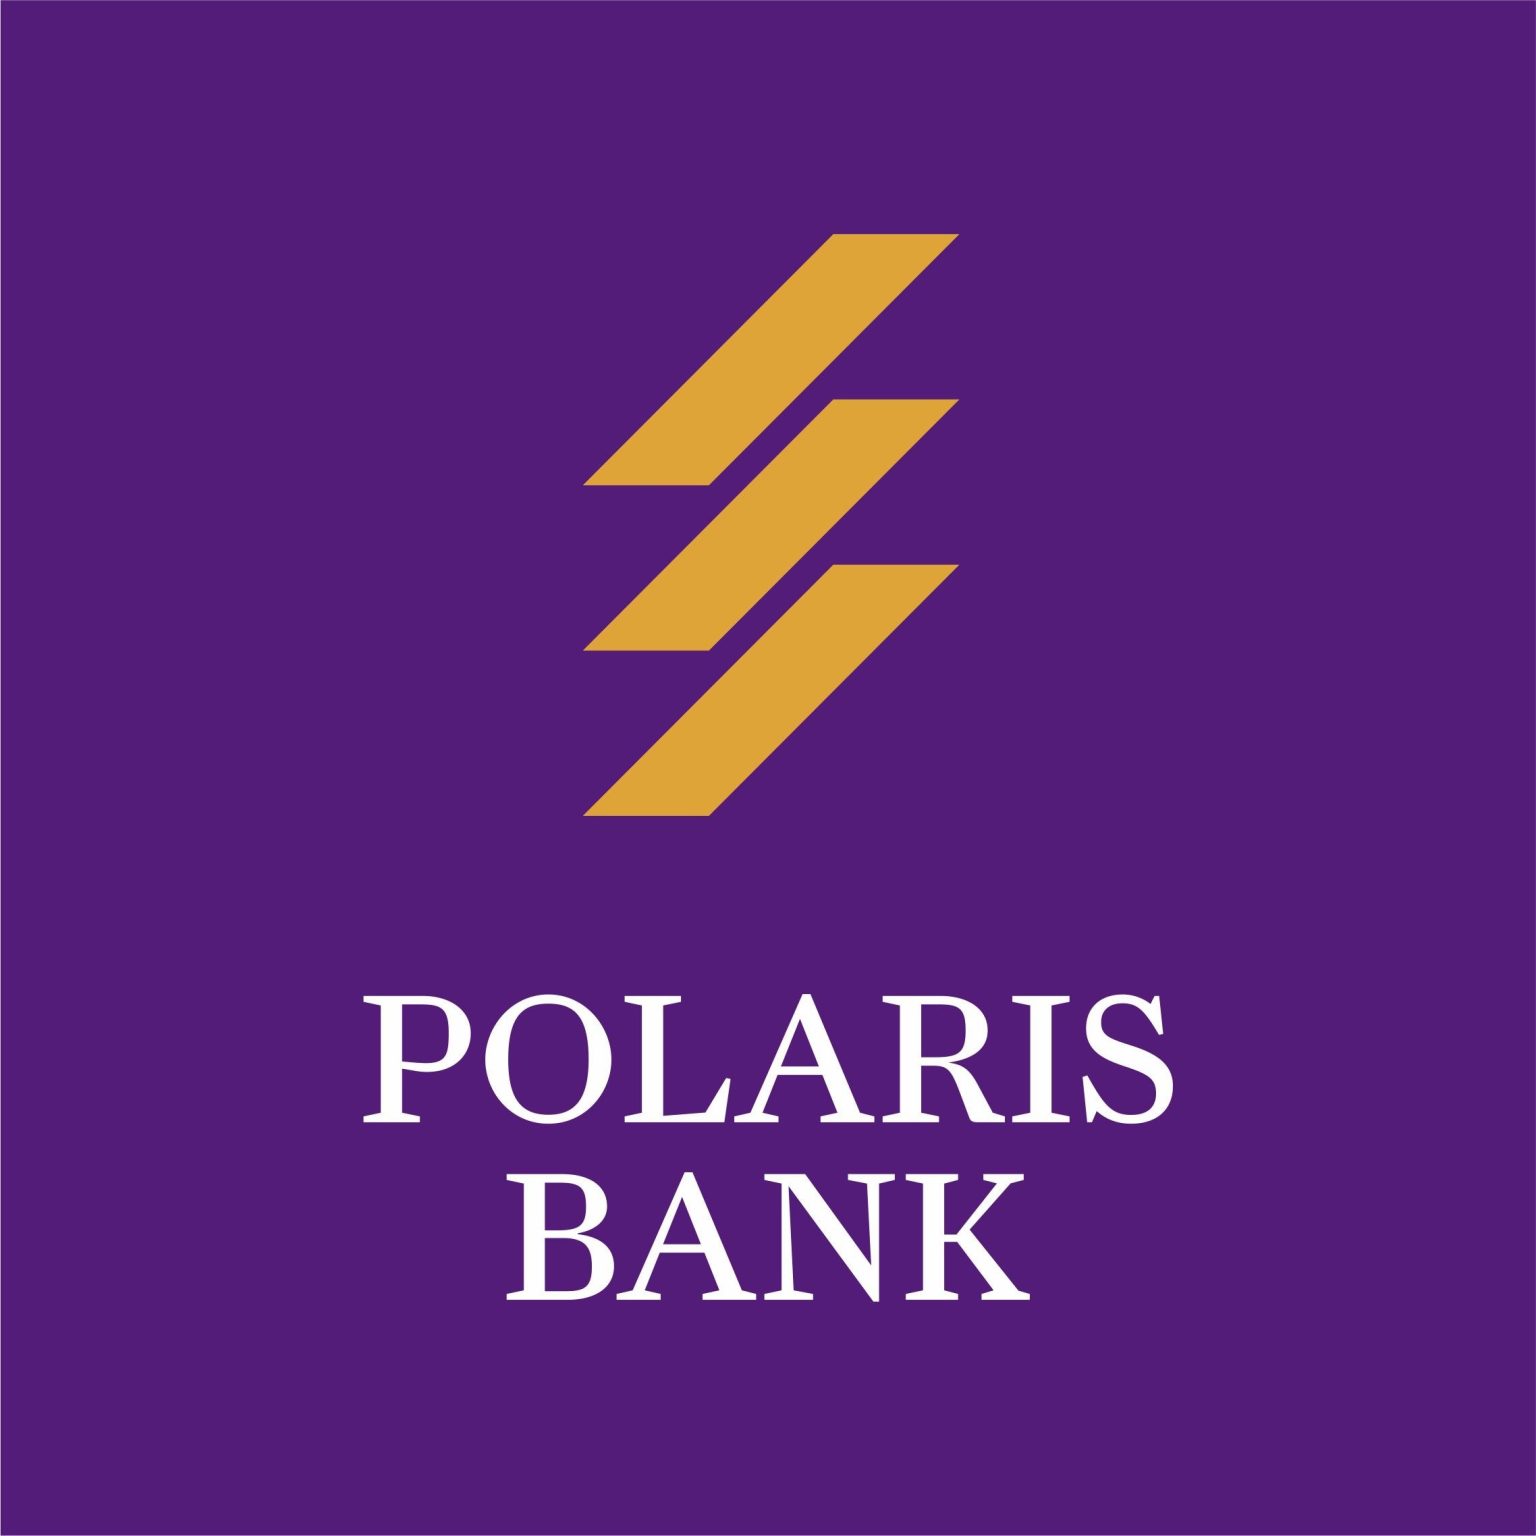 Polaris Bank and women empowerment